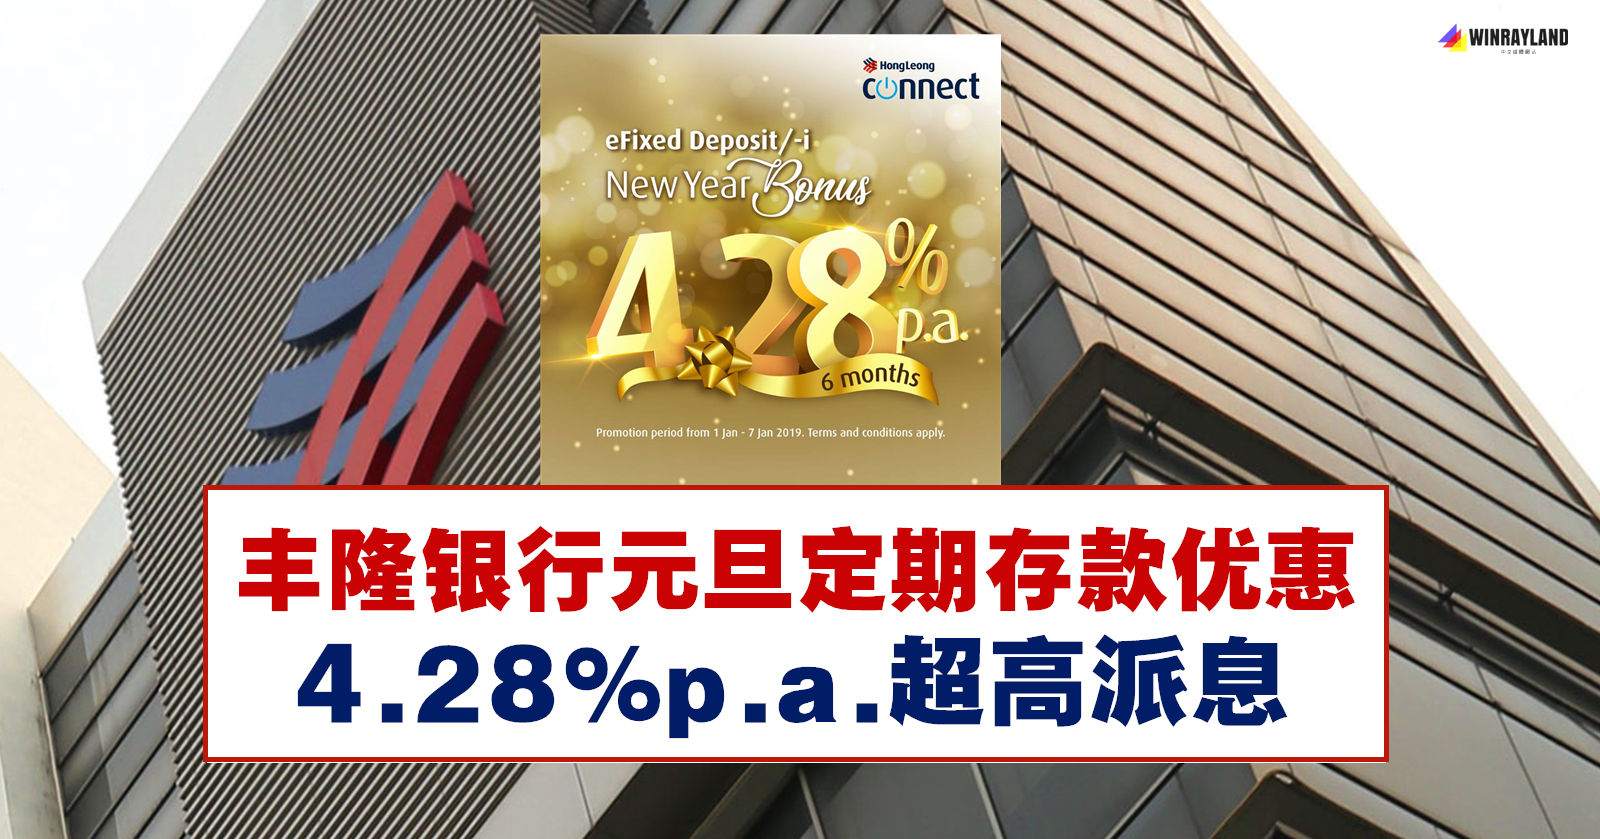 Hong Leong Bank元旦定期存款优惠，4.28%p.a.超高派息 - WINRAYLAND